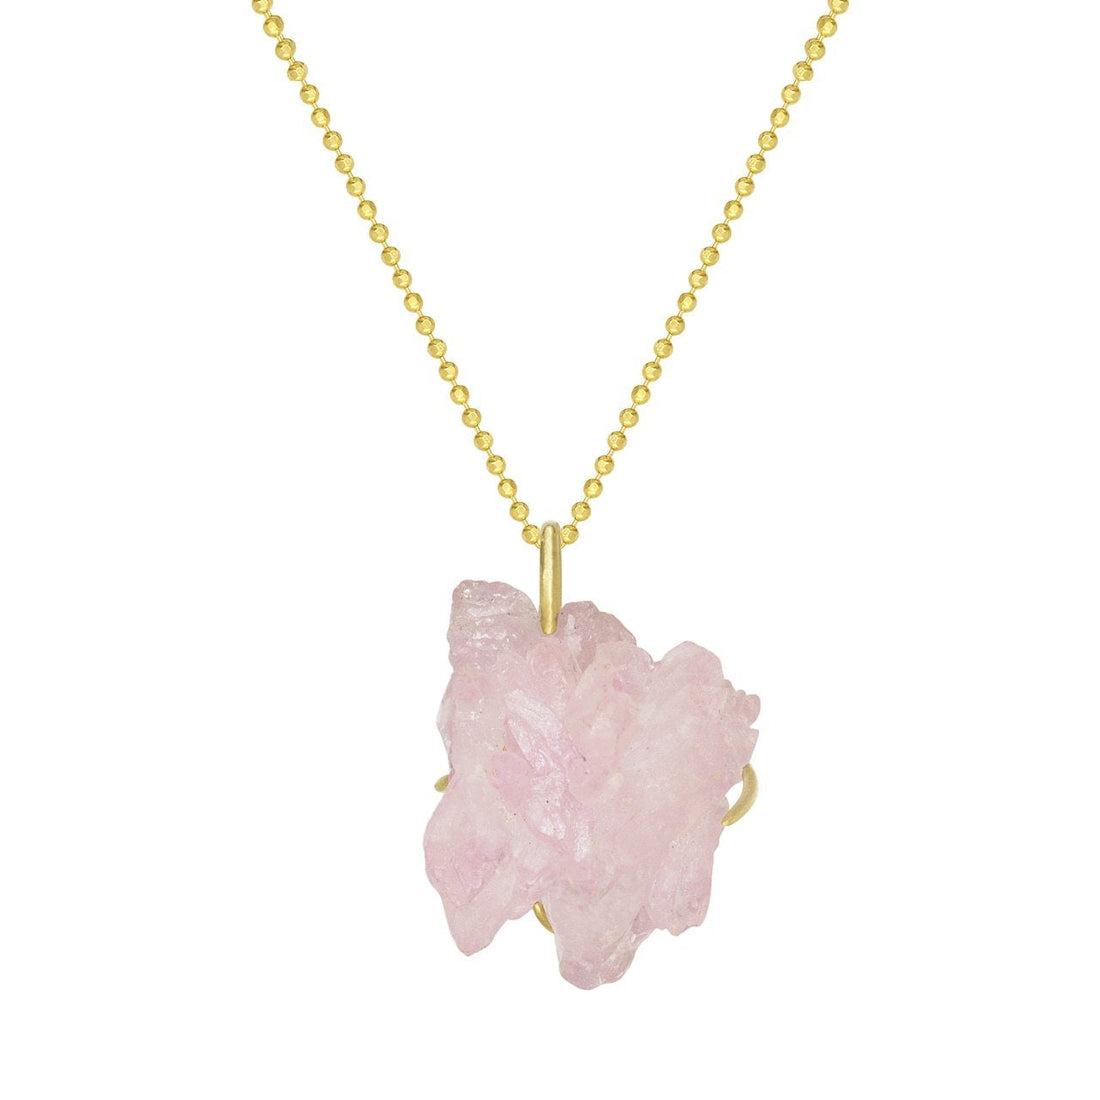 Crystalline Rose Quartz Necklace - Ele Keats Jewelry